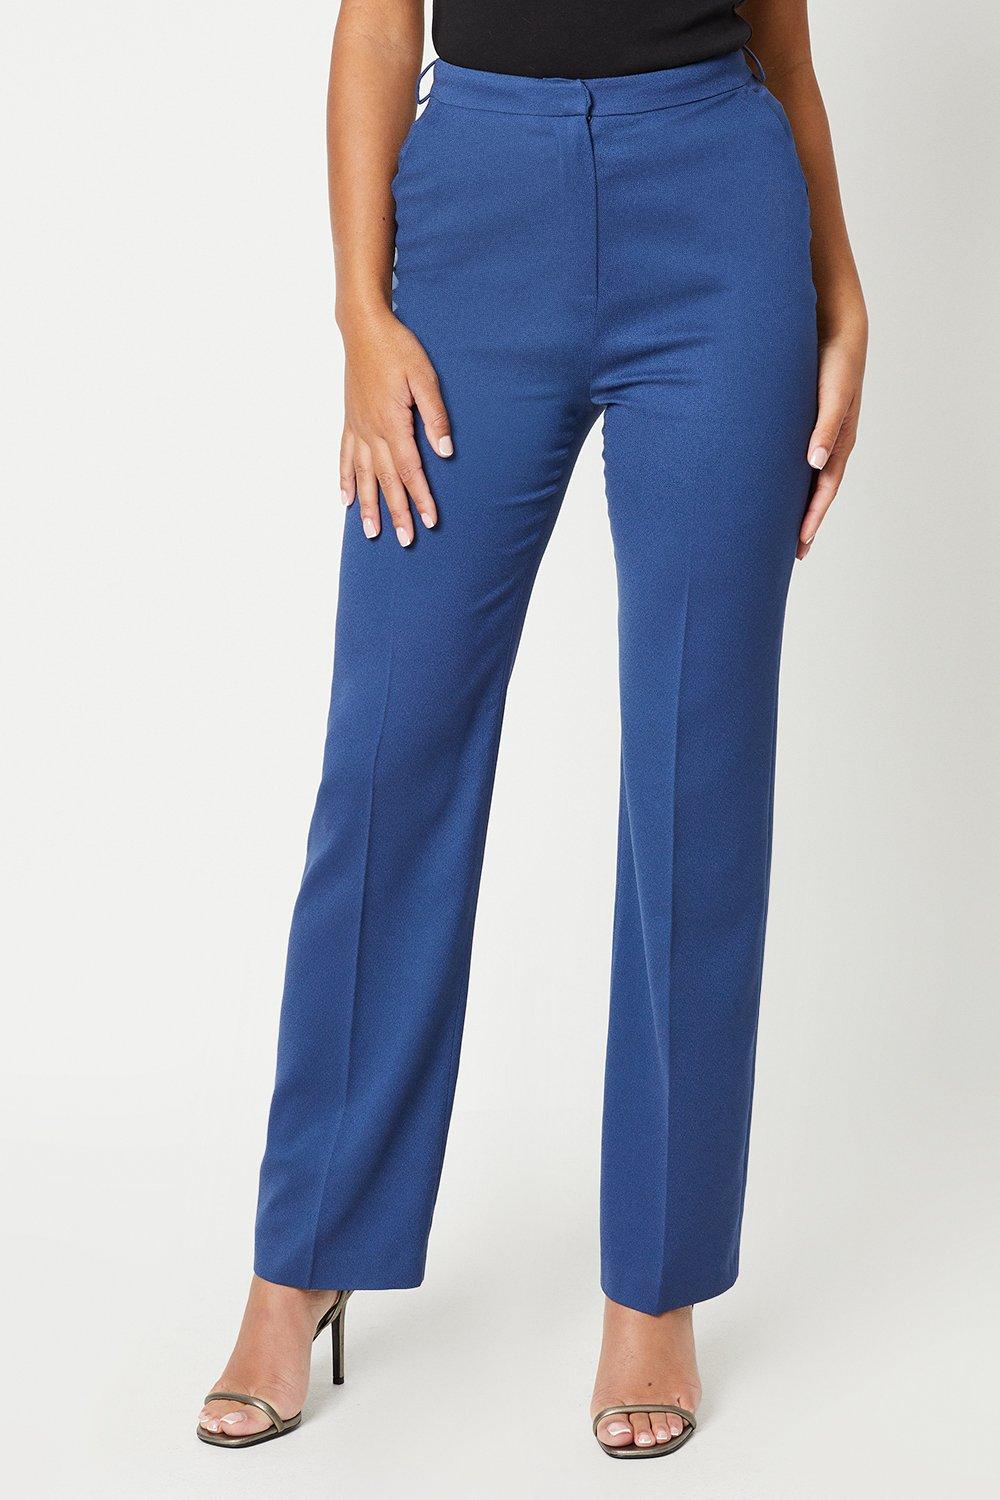 Julie Kuyath Straight Leg Tailored Trouser - Slate Blue